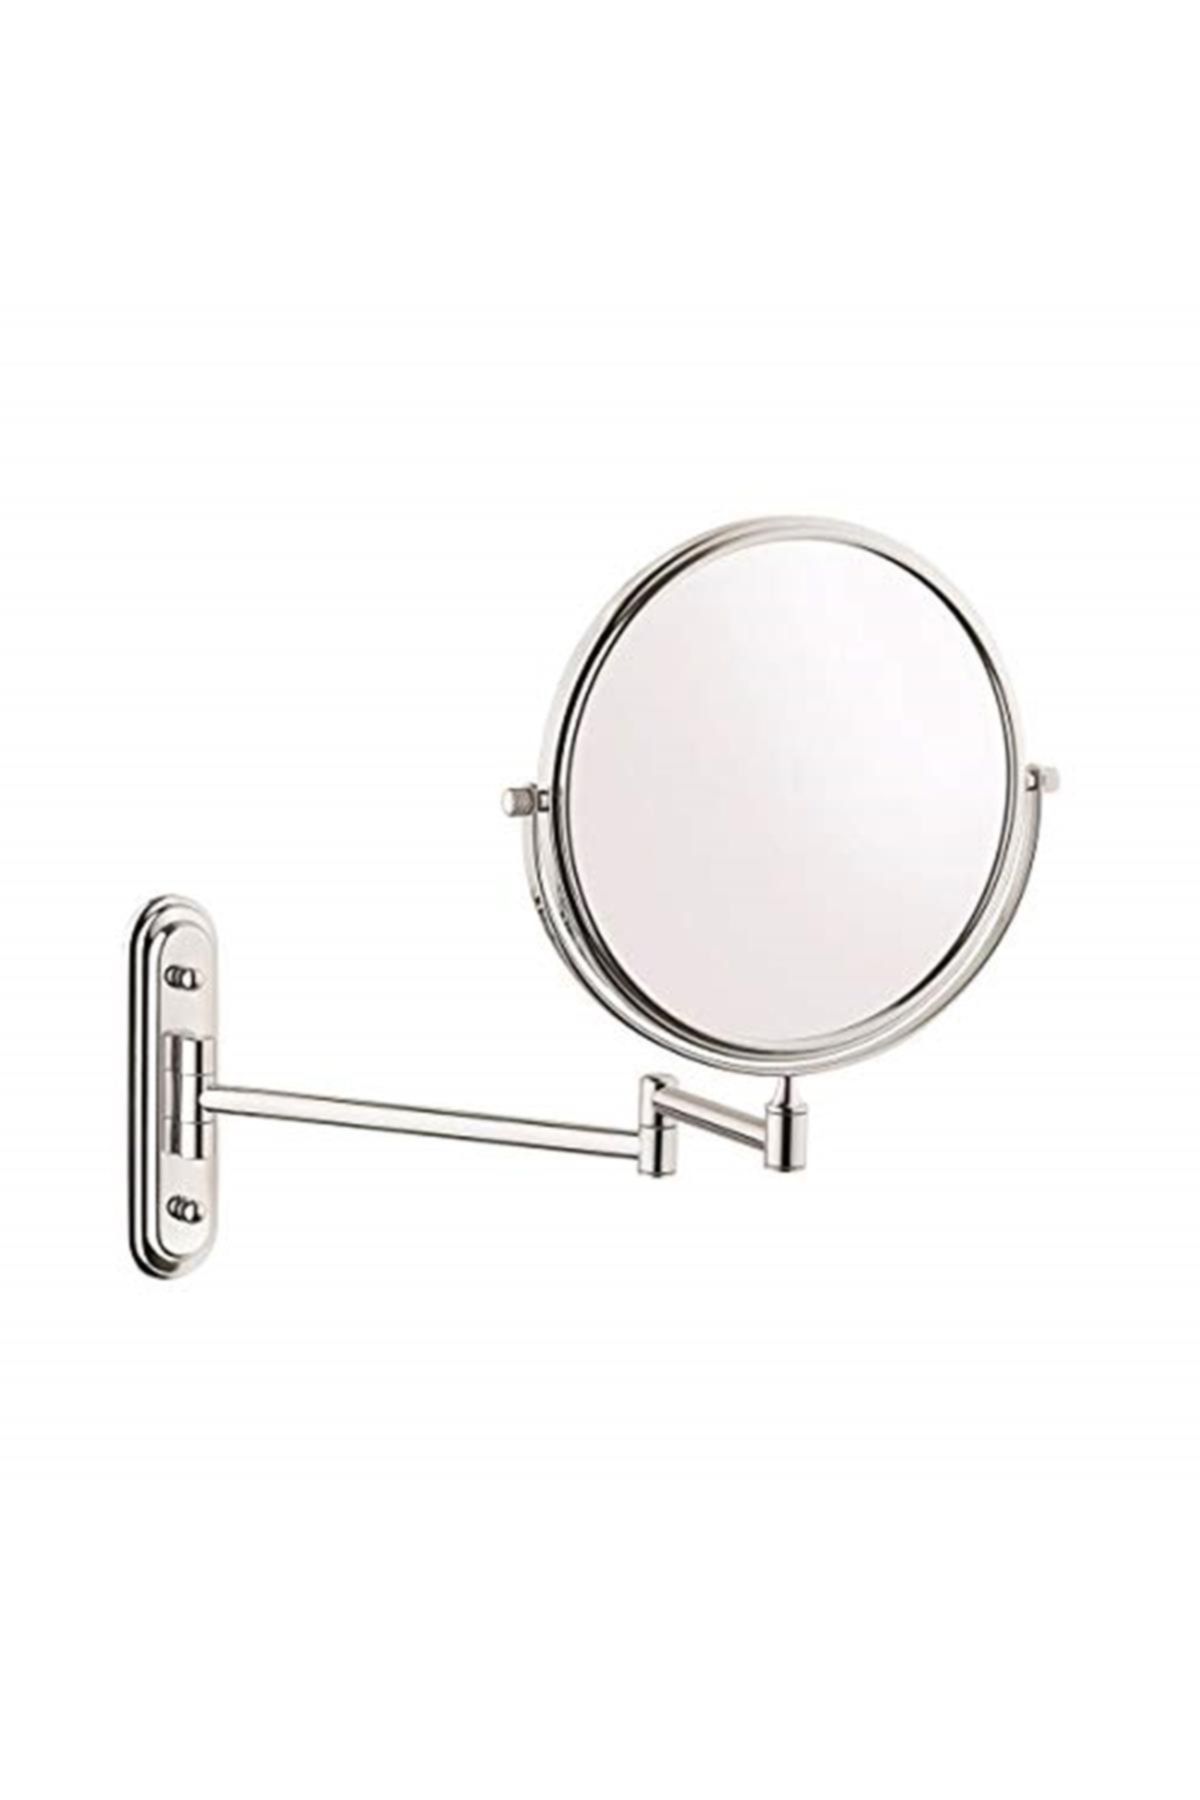 VitrA Marka: Arkitekta A44009 Makyaj Ve Traş Aynası, Krom Kategori: Banyo Çöp Kovası